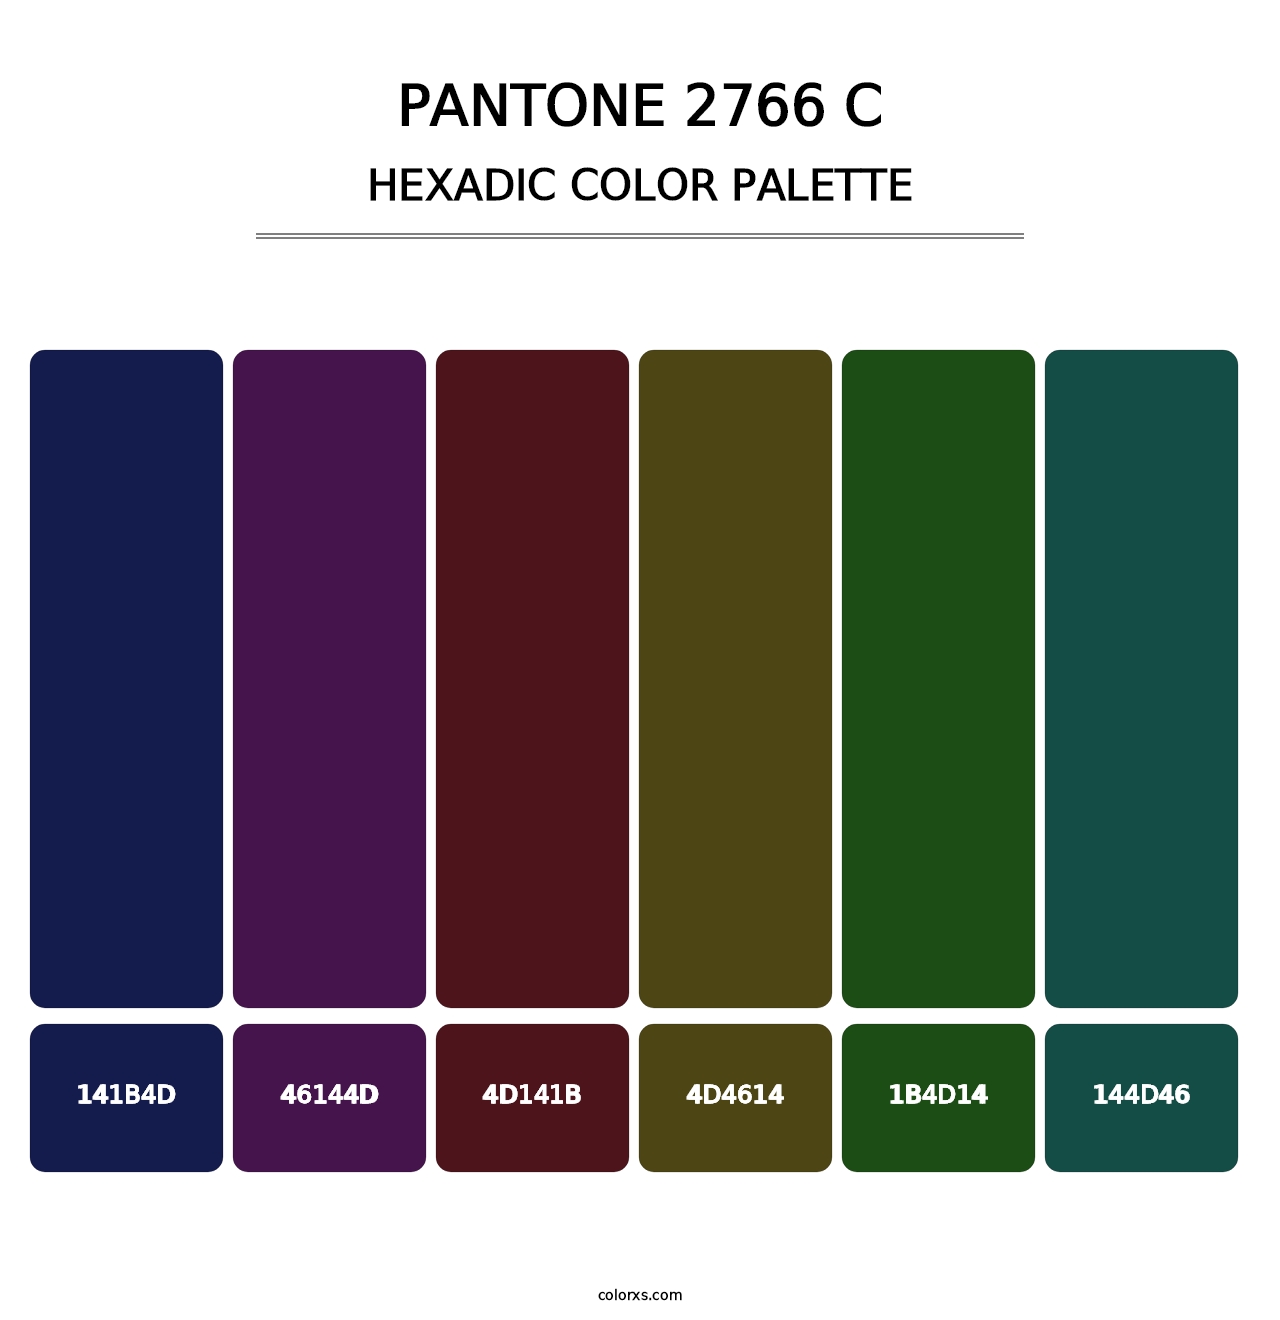 PANTONE 2766 C - Hexadic Color Palette